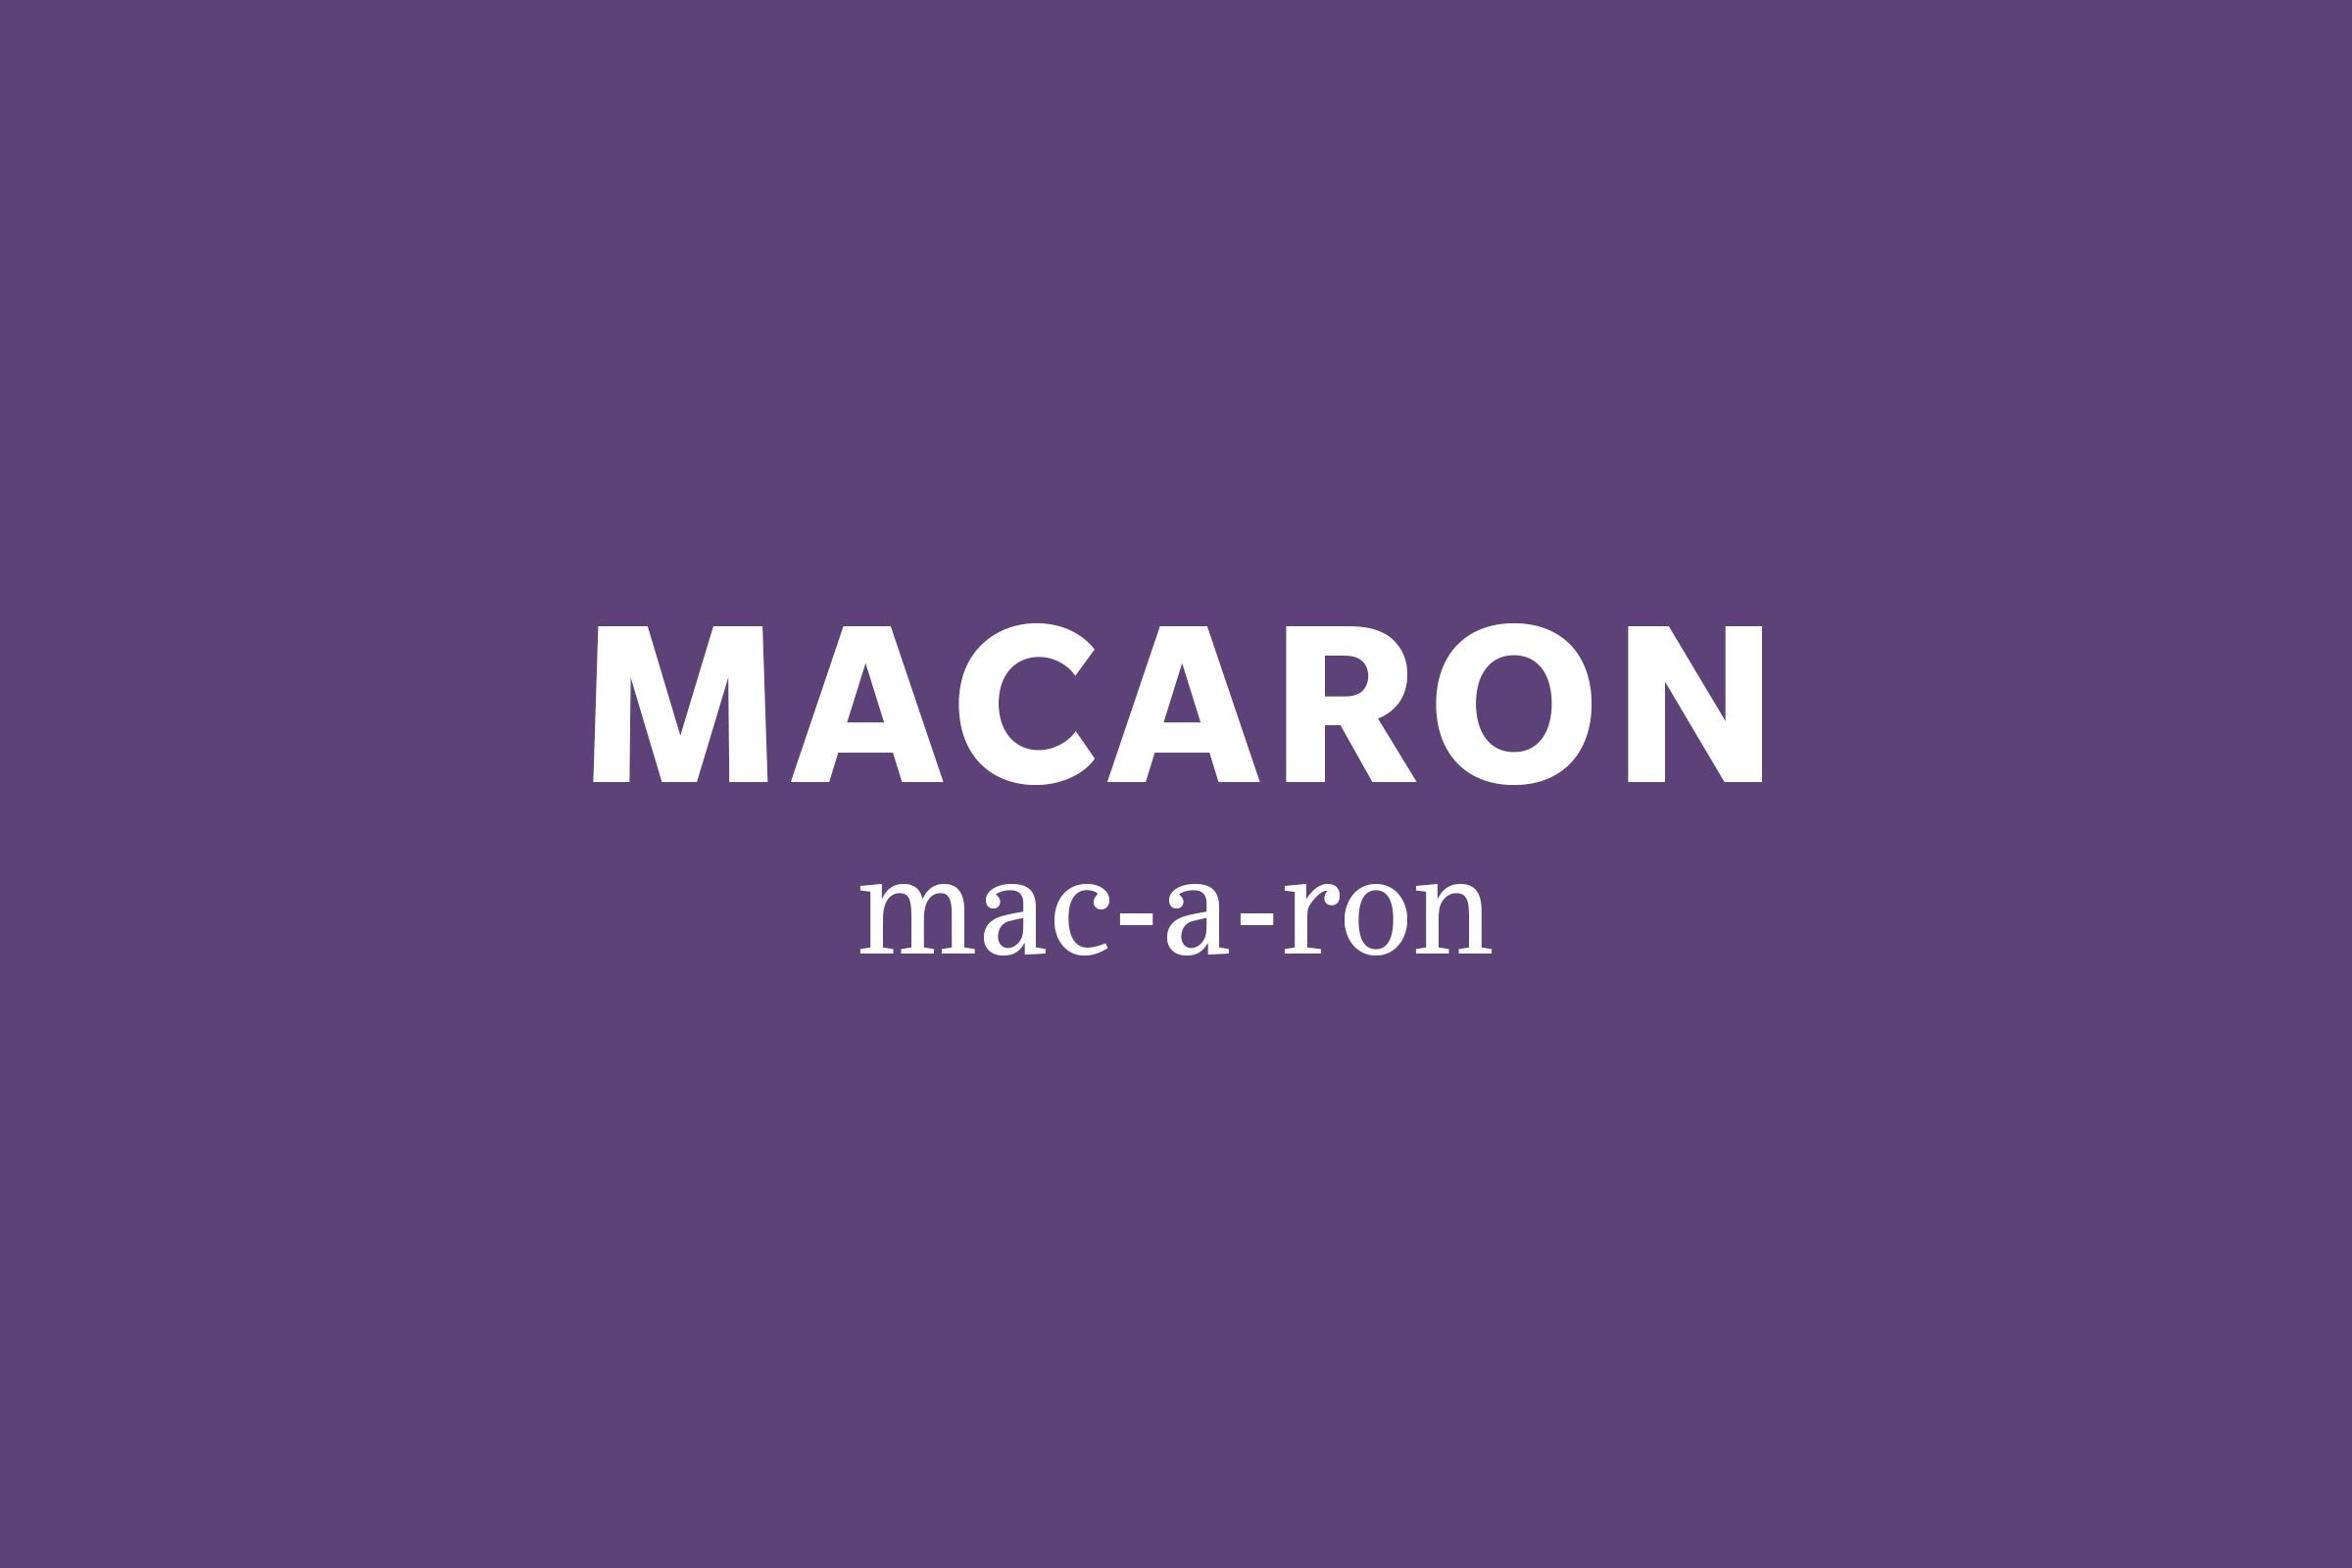 macaron pronunciation